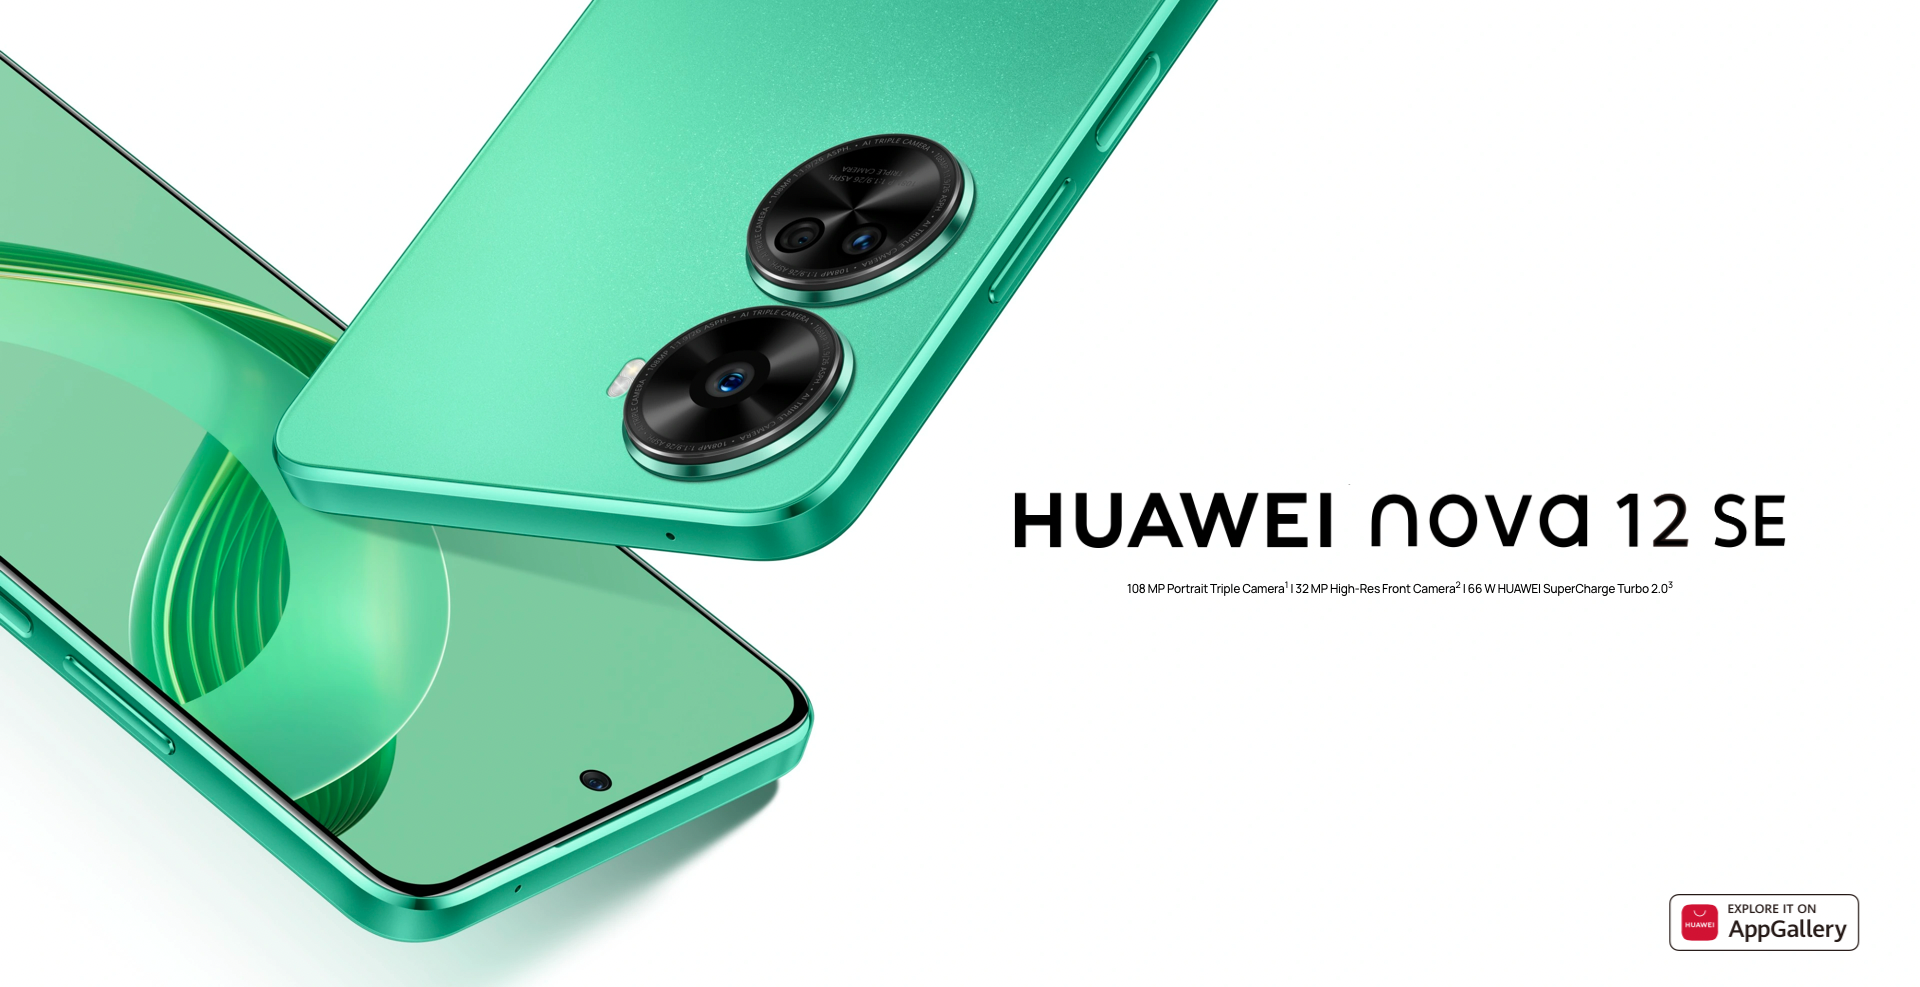 Huawei Nova 12 SE: OLED display, Snapdragon 680 chip, 108 MP camera and 66W charging